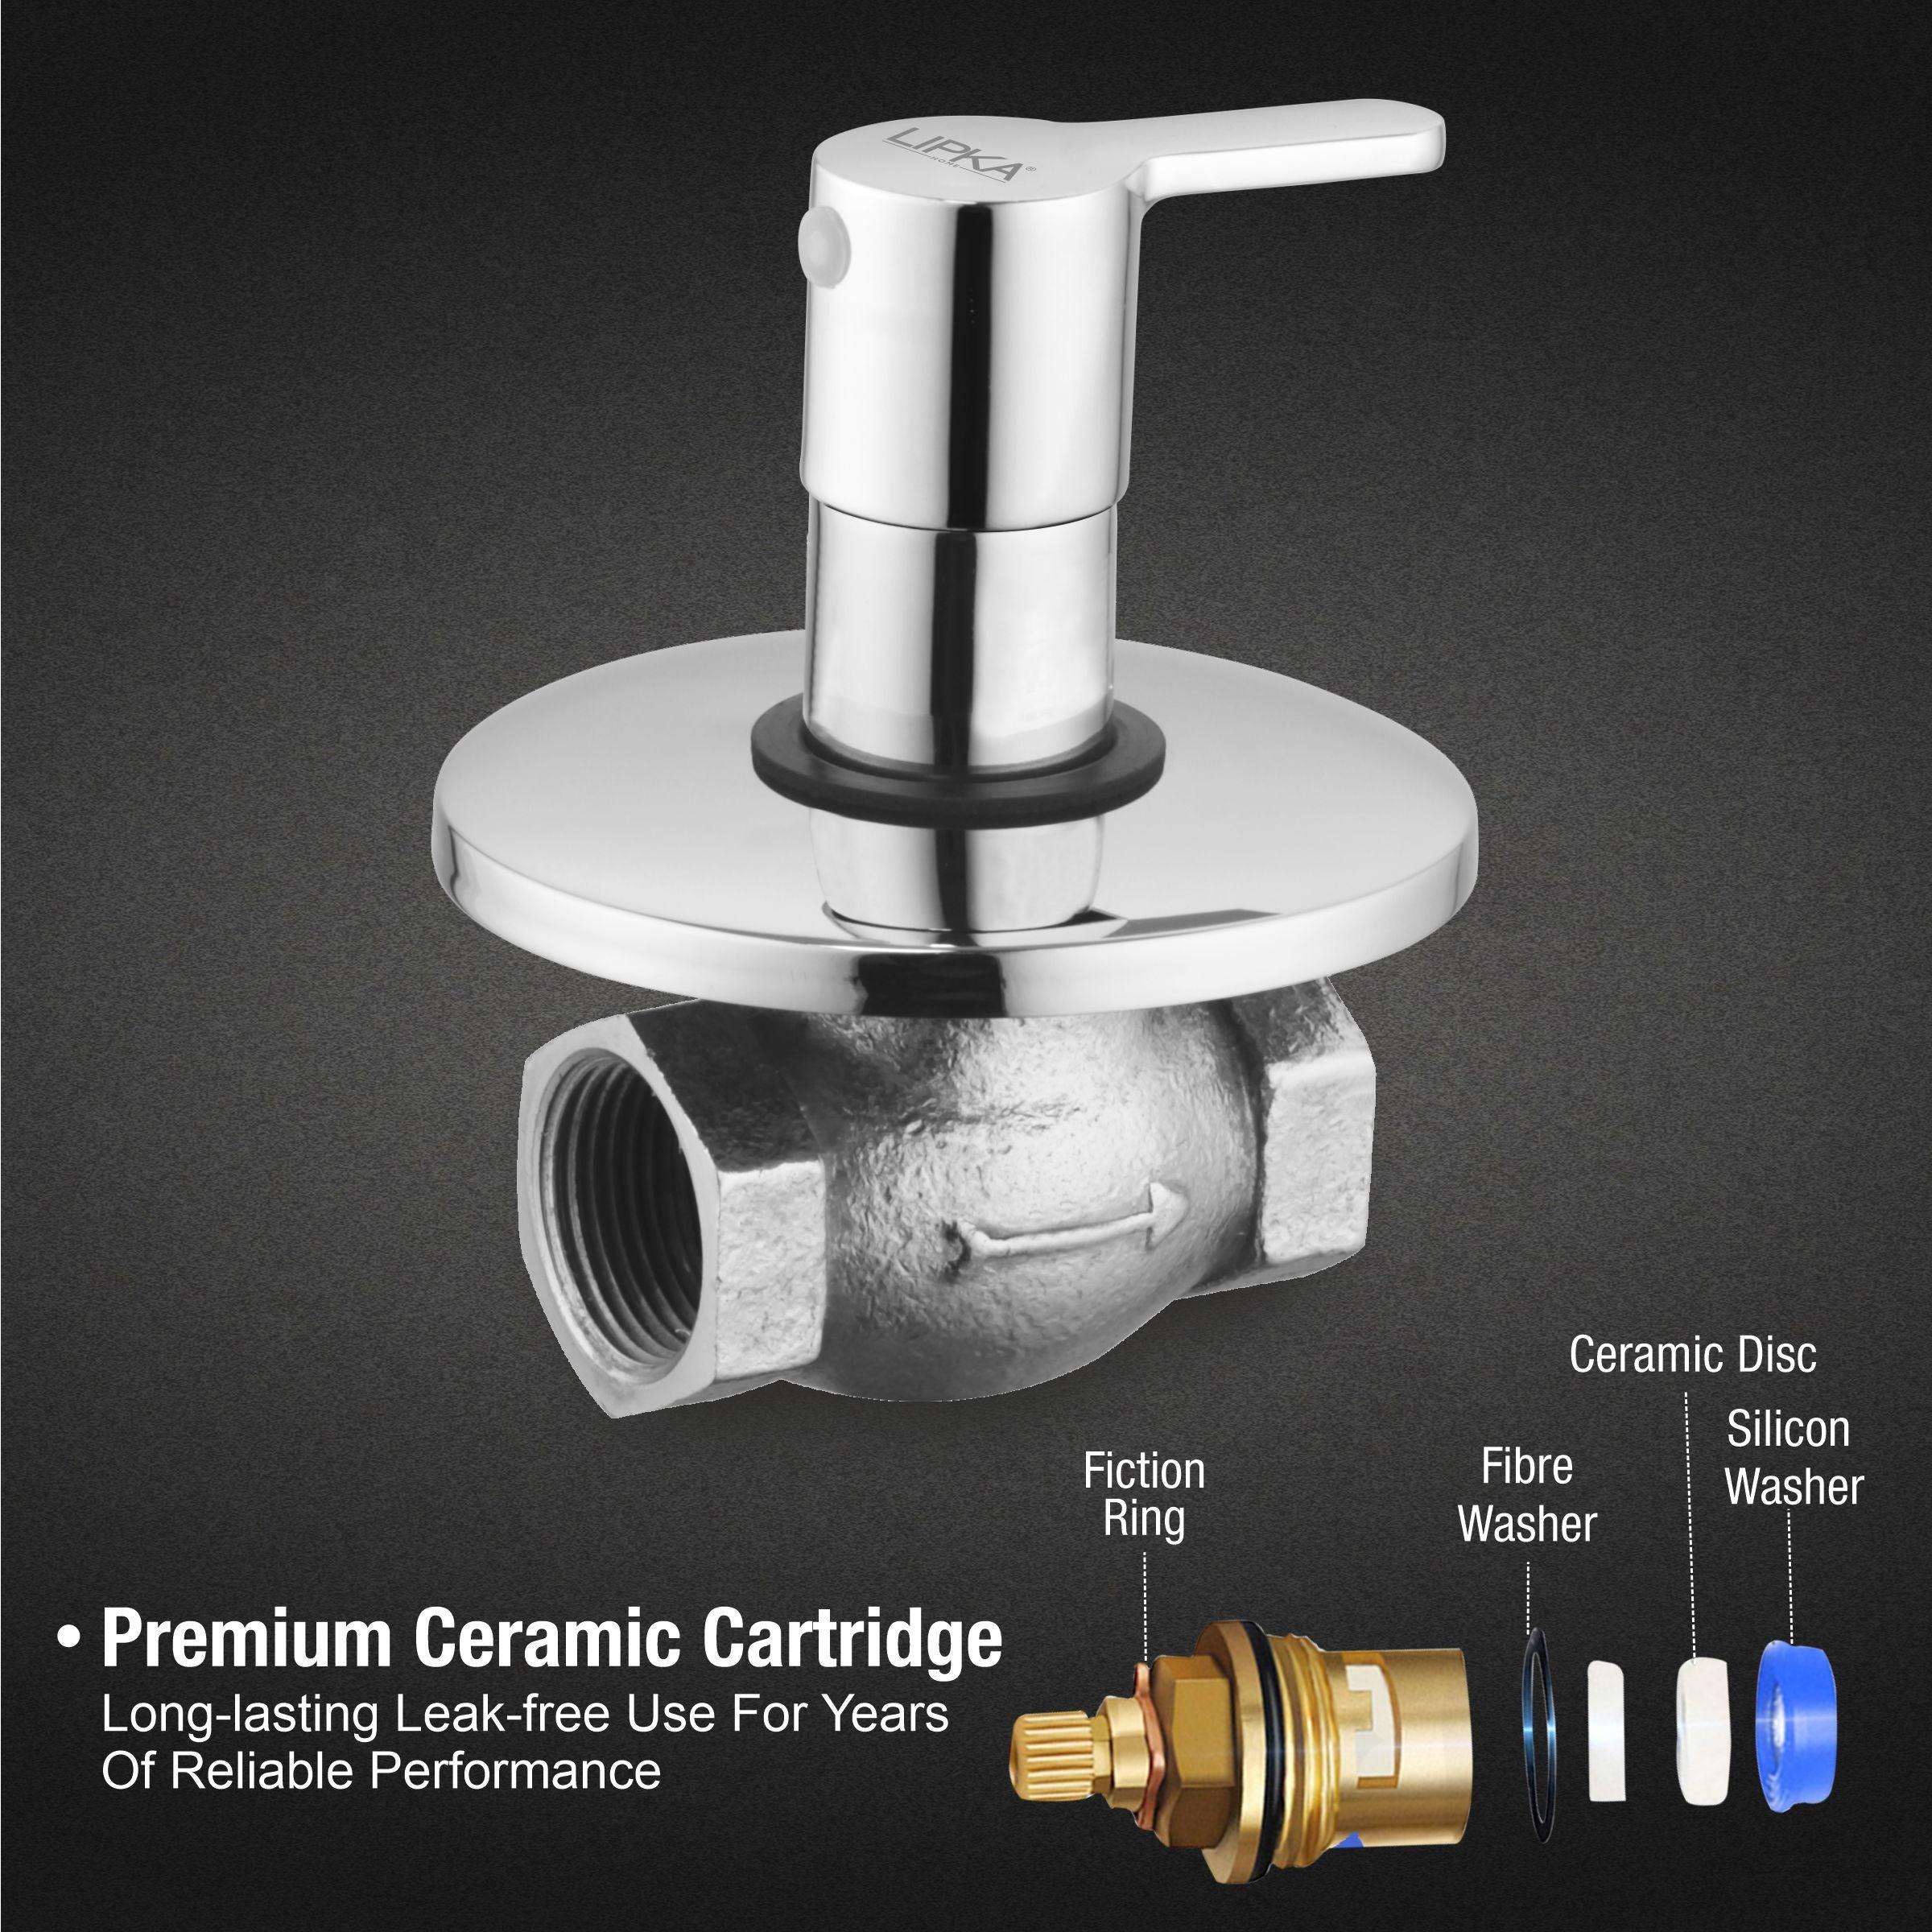 Fusion Flush Valve 25mm Brass Faucet - LIPKA - Lipka Home